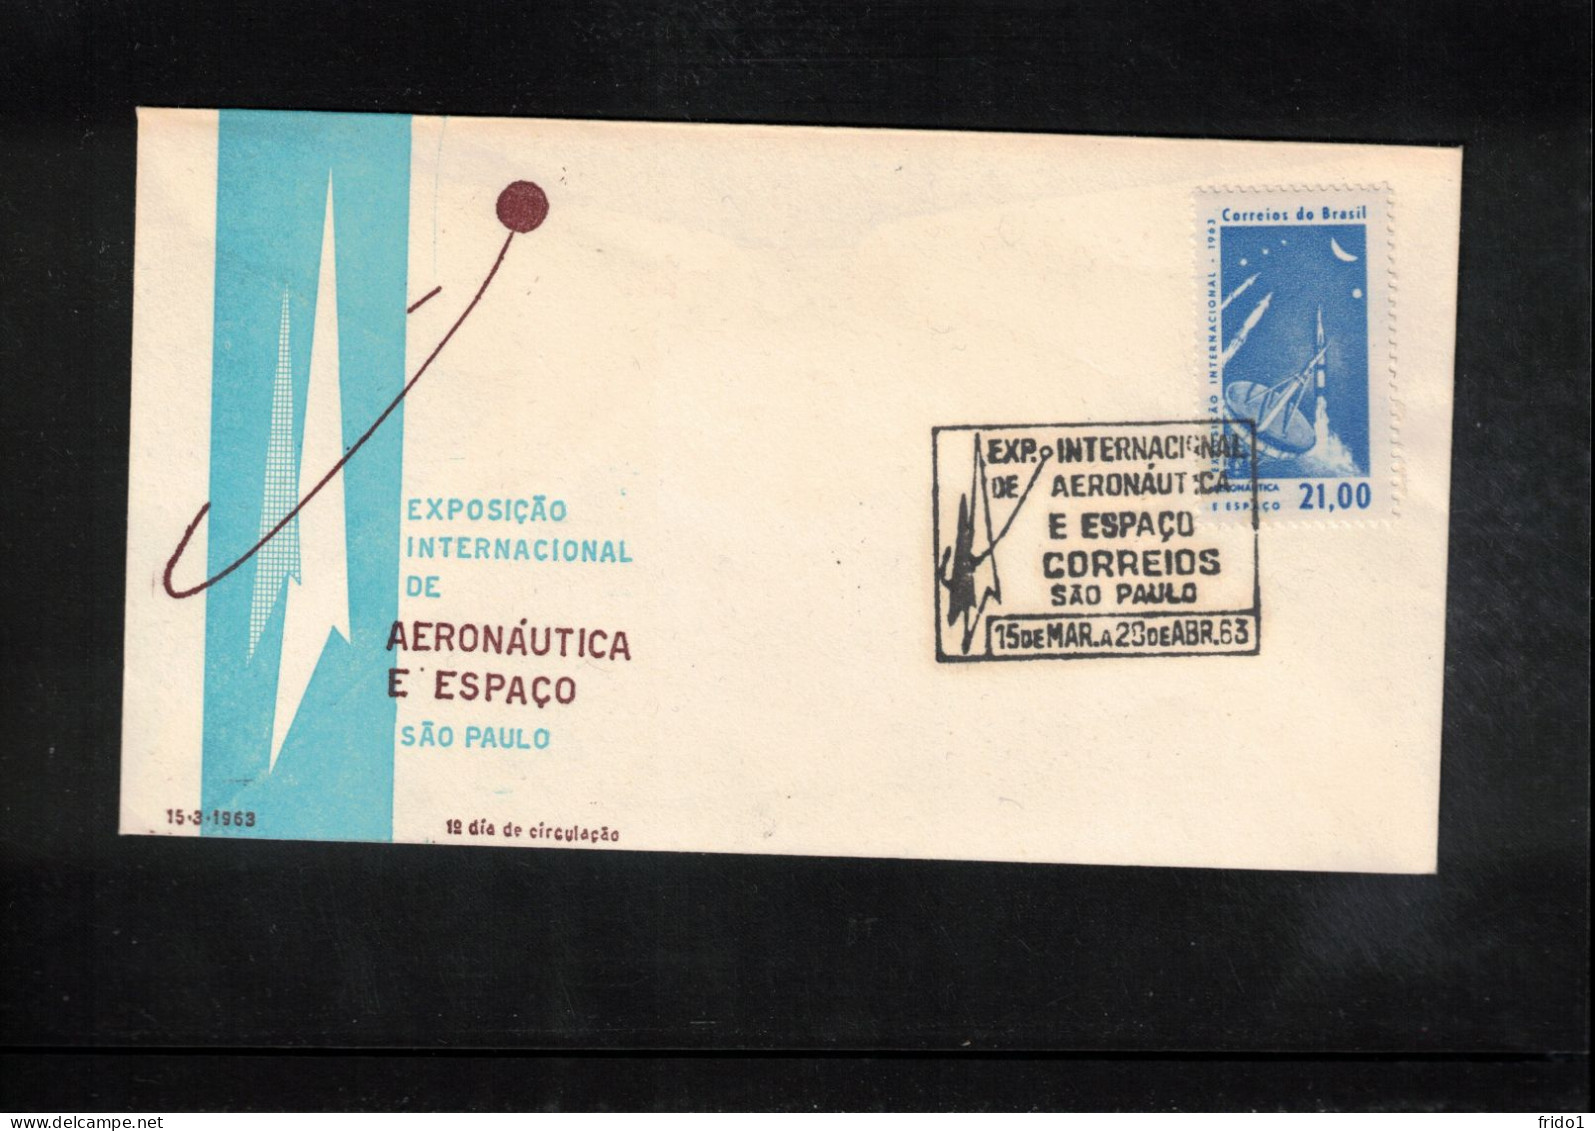 Brasil 1963 Space / Weltraum International Aeronautical Exhibition + Space Interesting Cover FDC - Zuid-Amerika